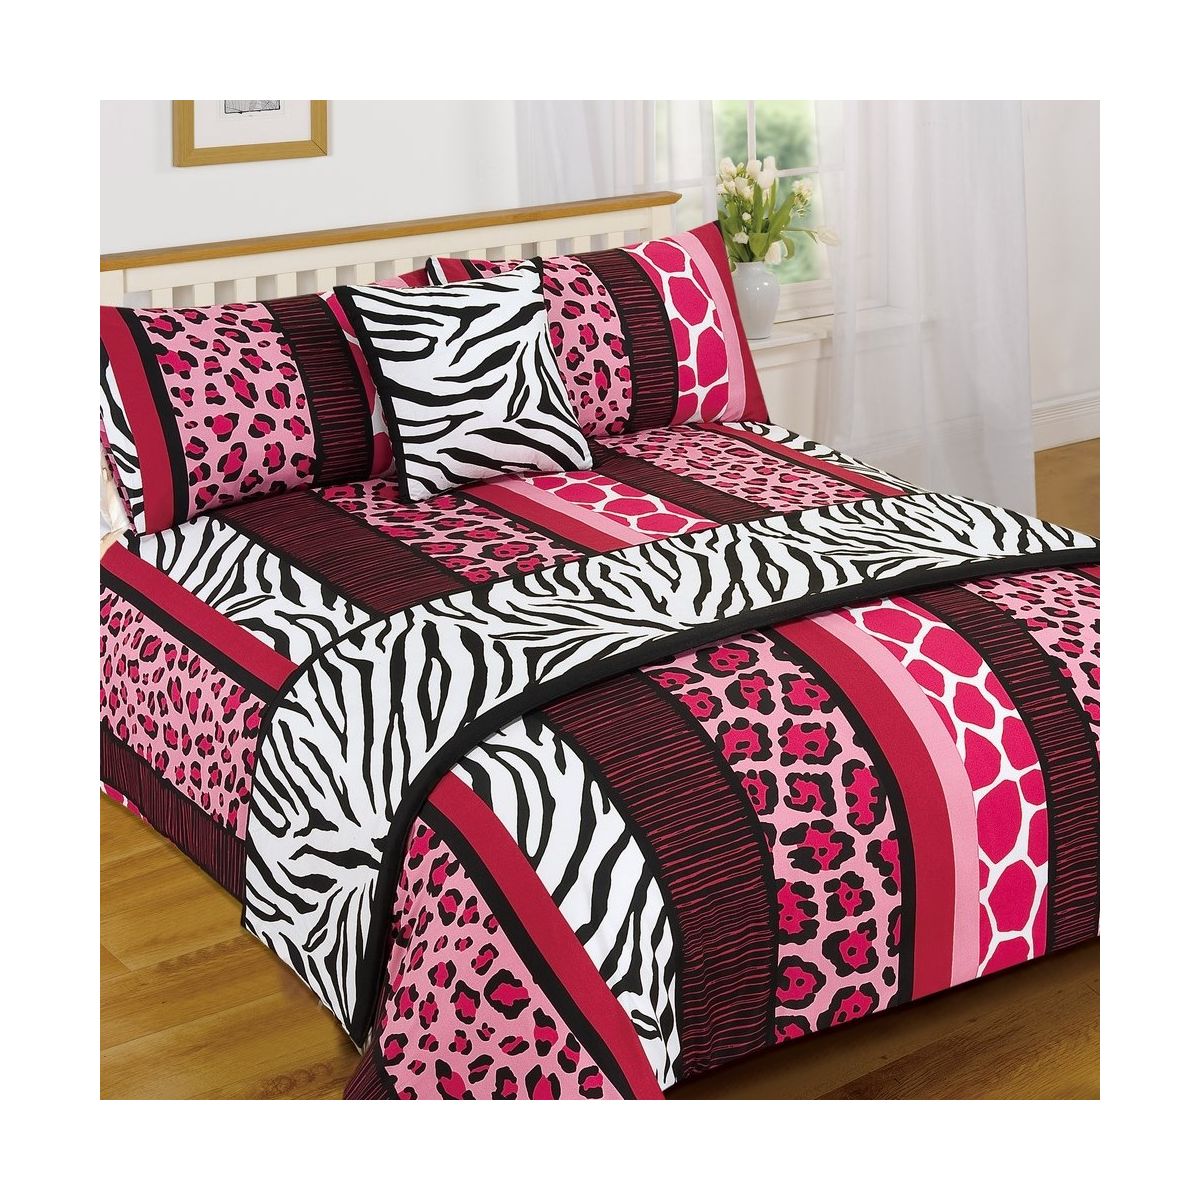 Dreamscene Serengeti Bed in a Bag Bedding Set, Pink - King